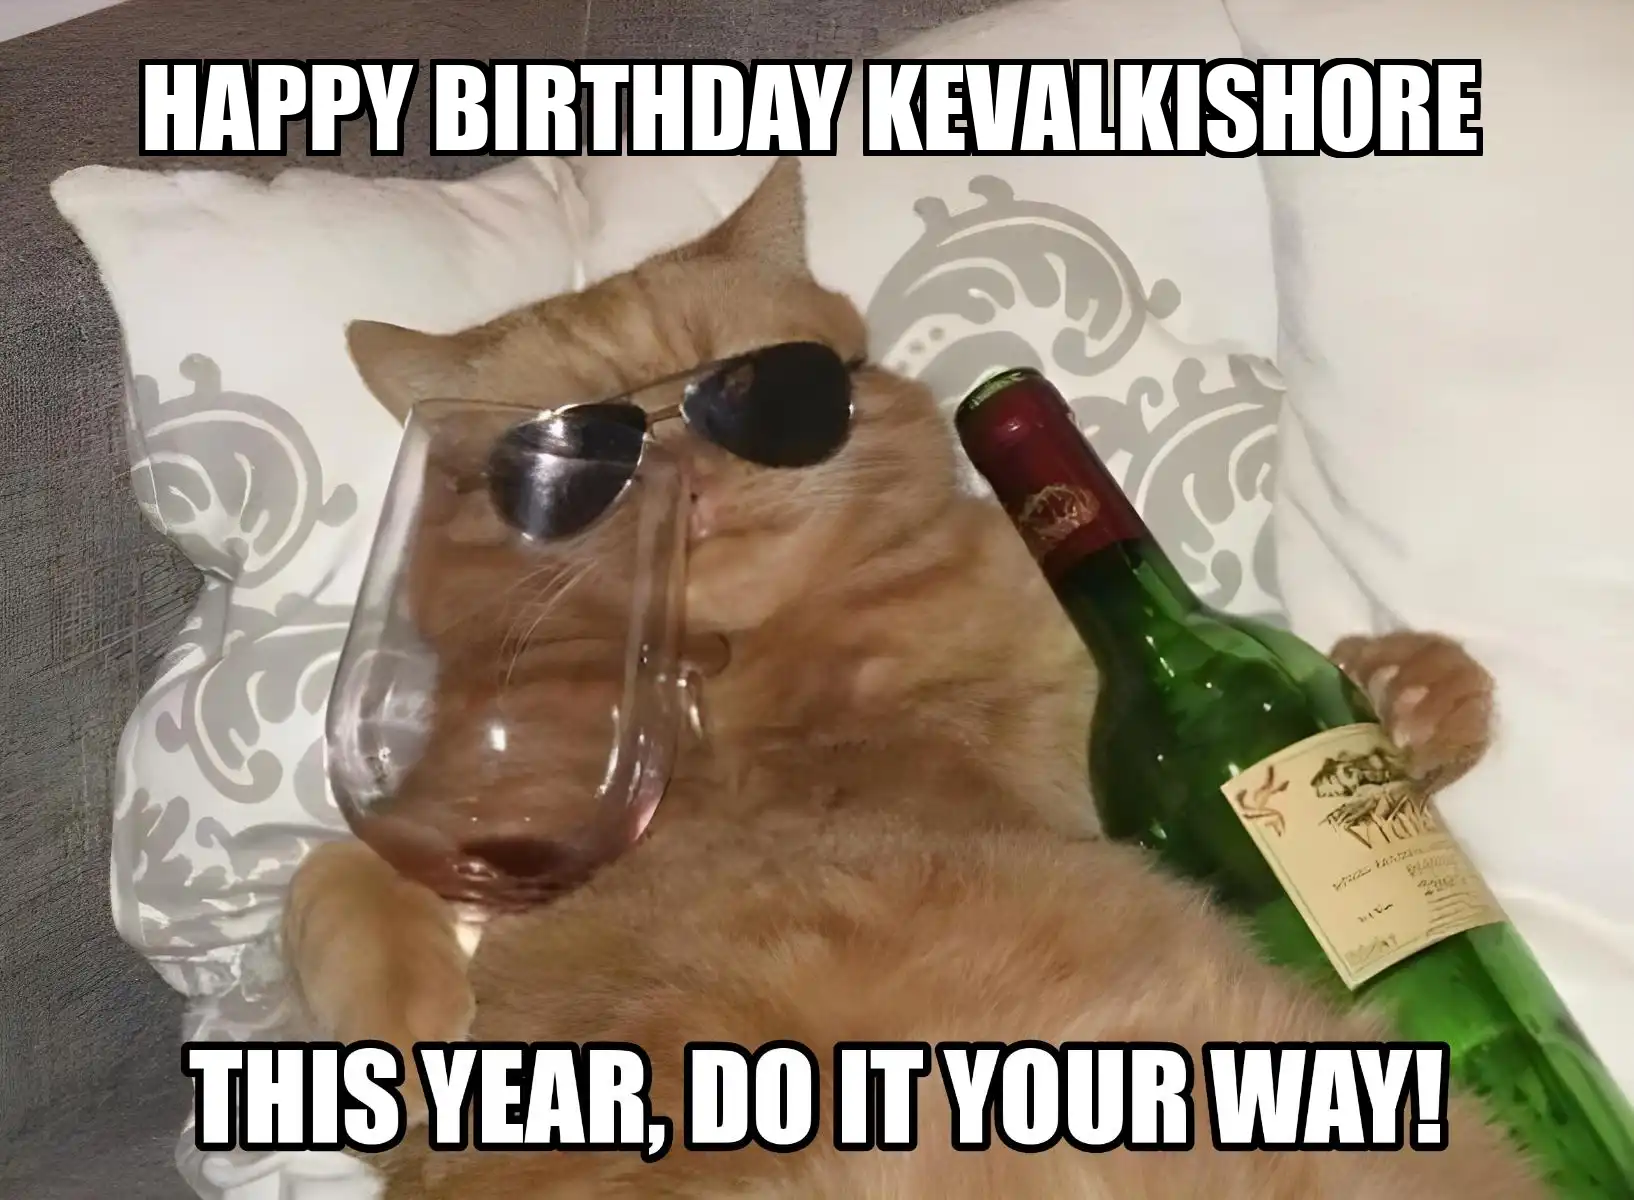 Happy Birthday Kevalkishore This Year Do It Your Way Meme